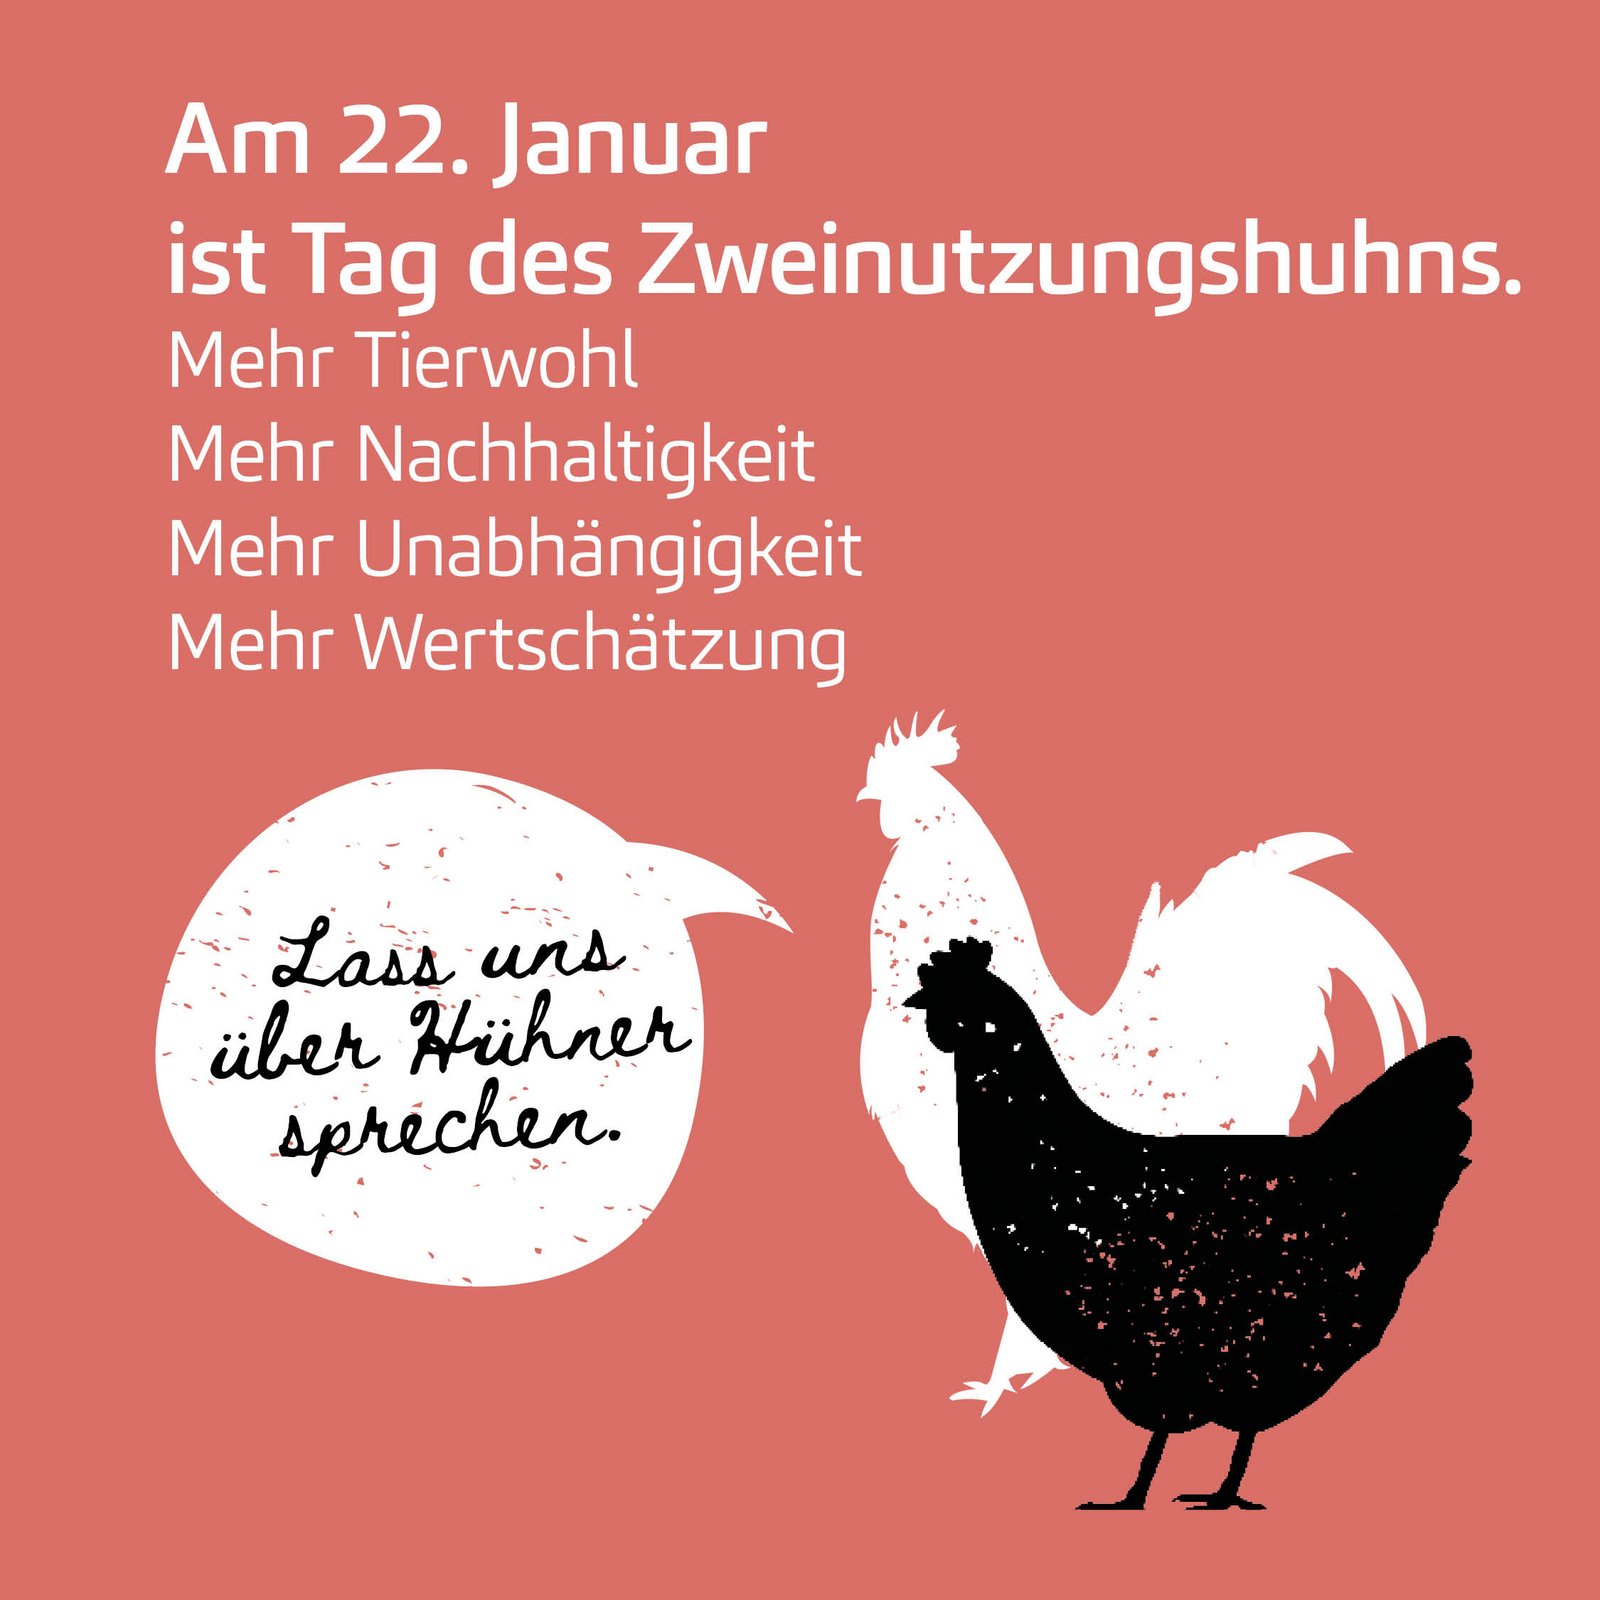 Flyer zum Tag des Zweinutzungshuhns am 22. Januar